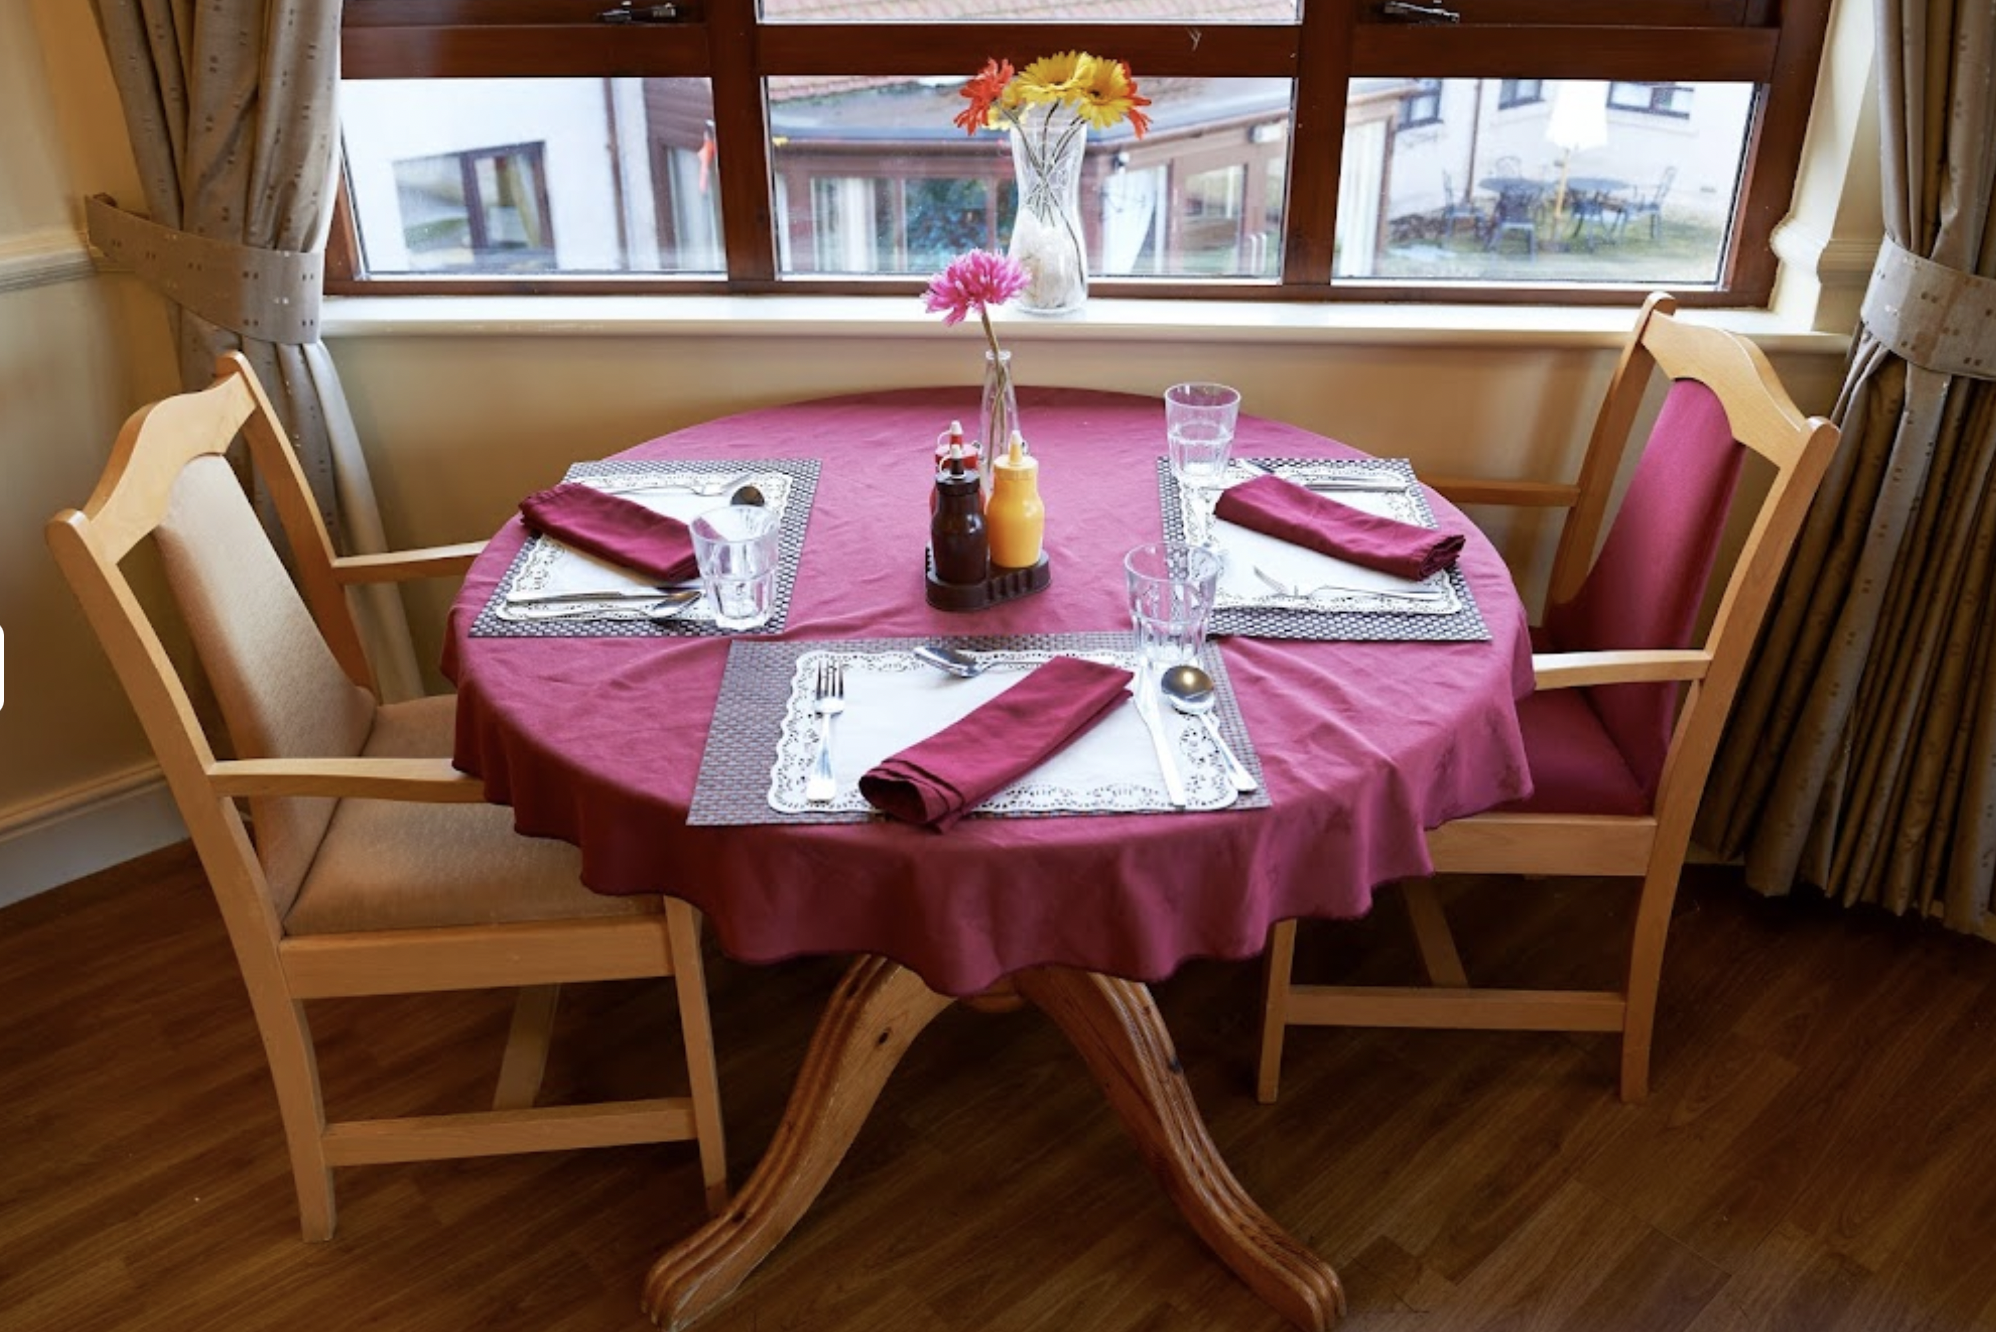 Dining room of Braid Hills care home in Edinburgh, Scotland